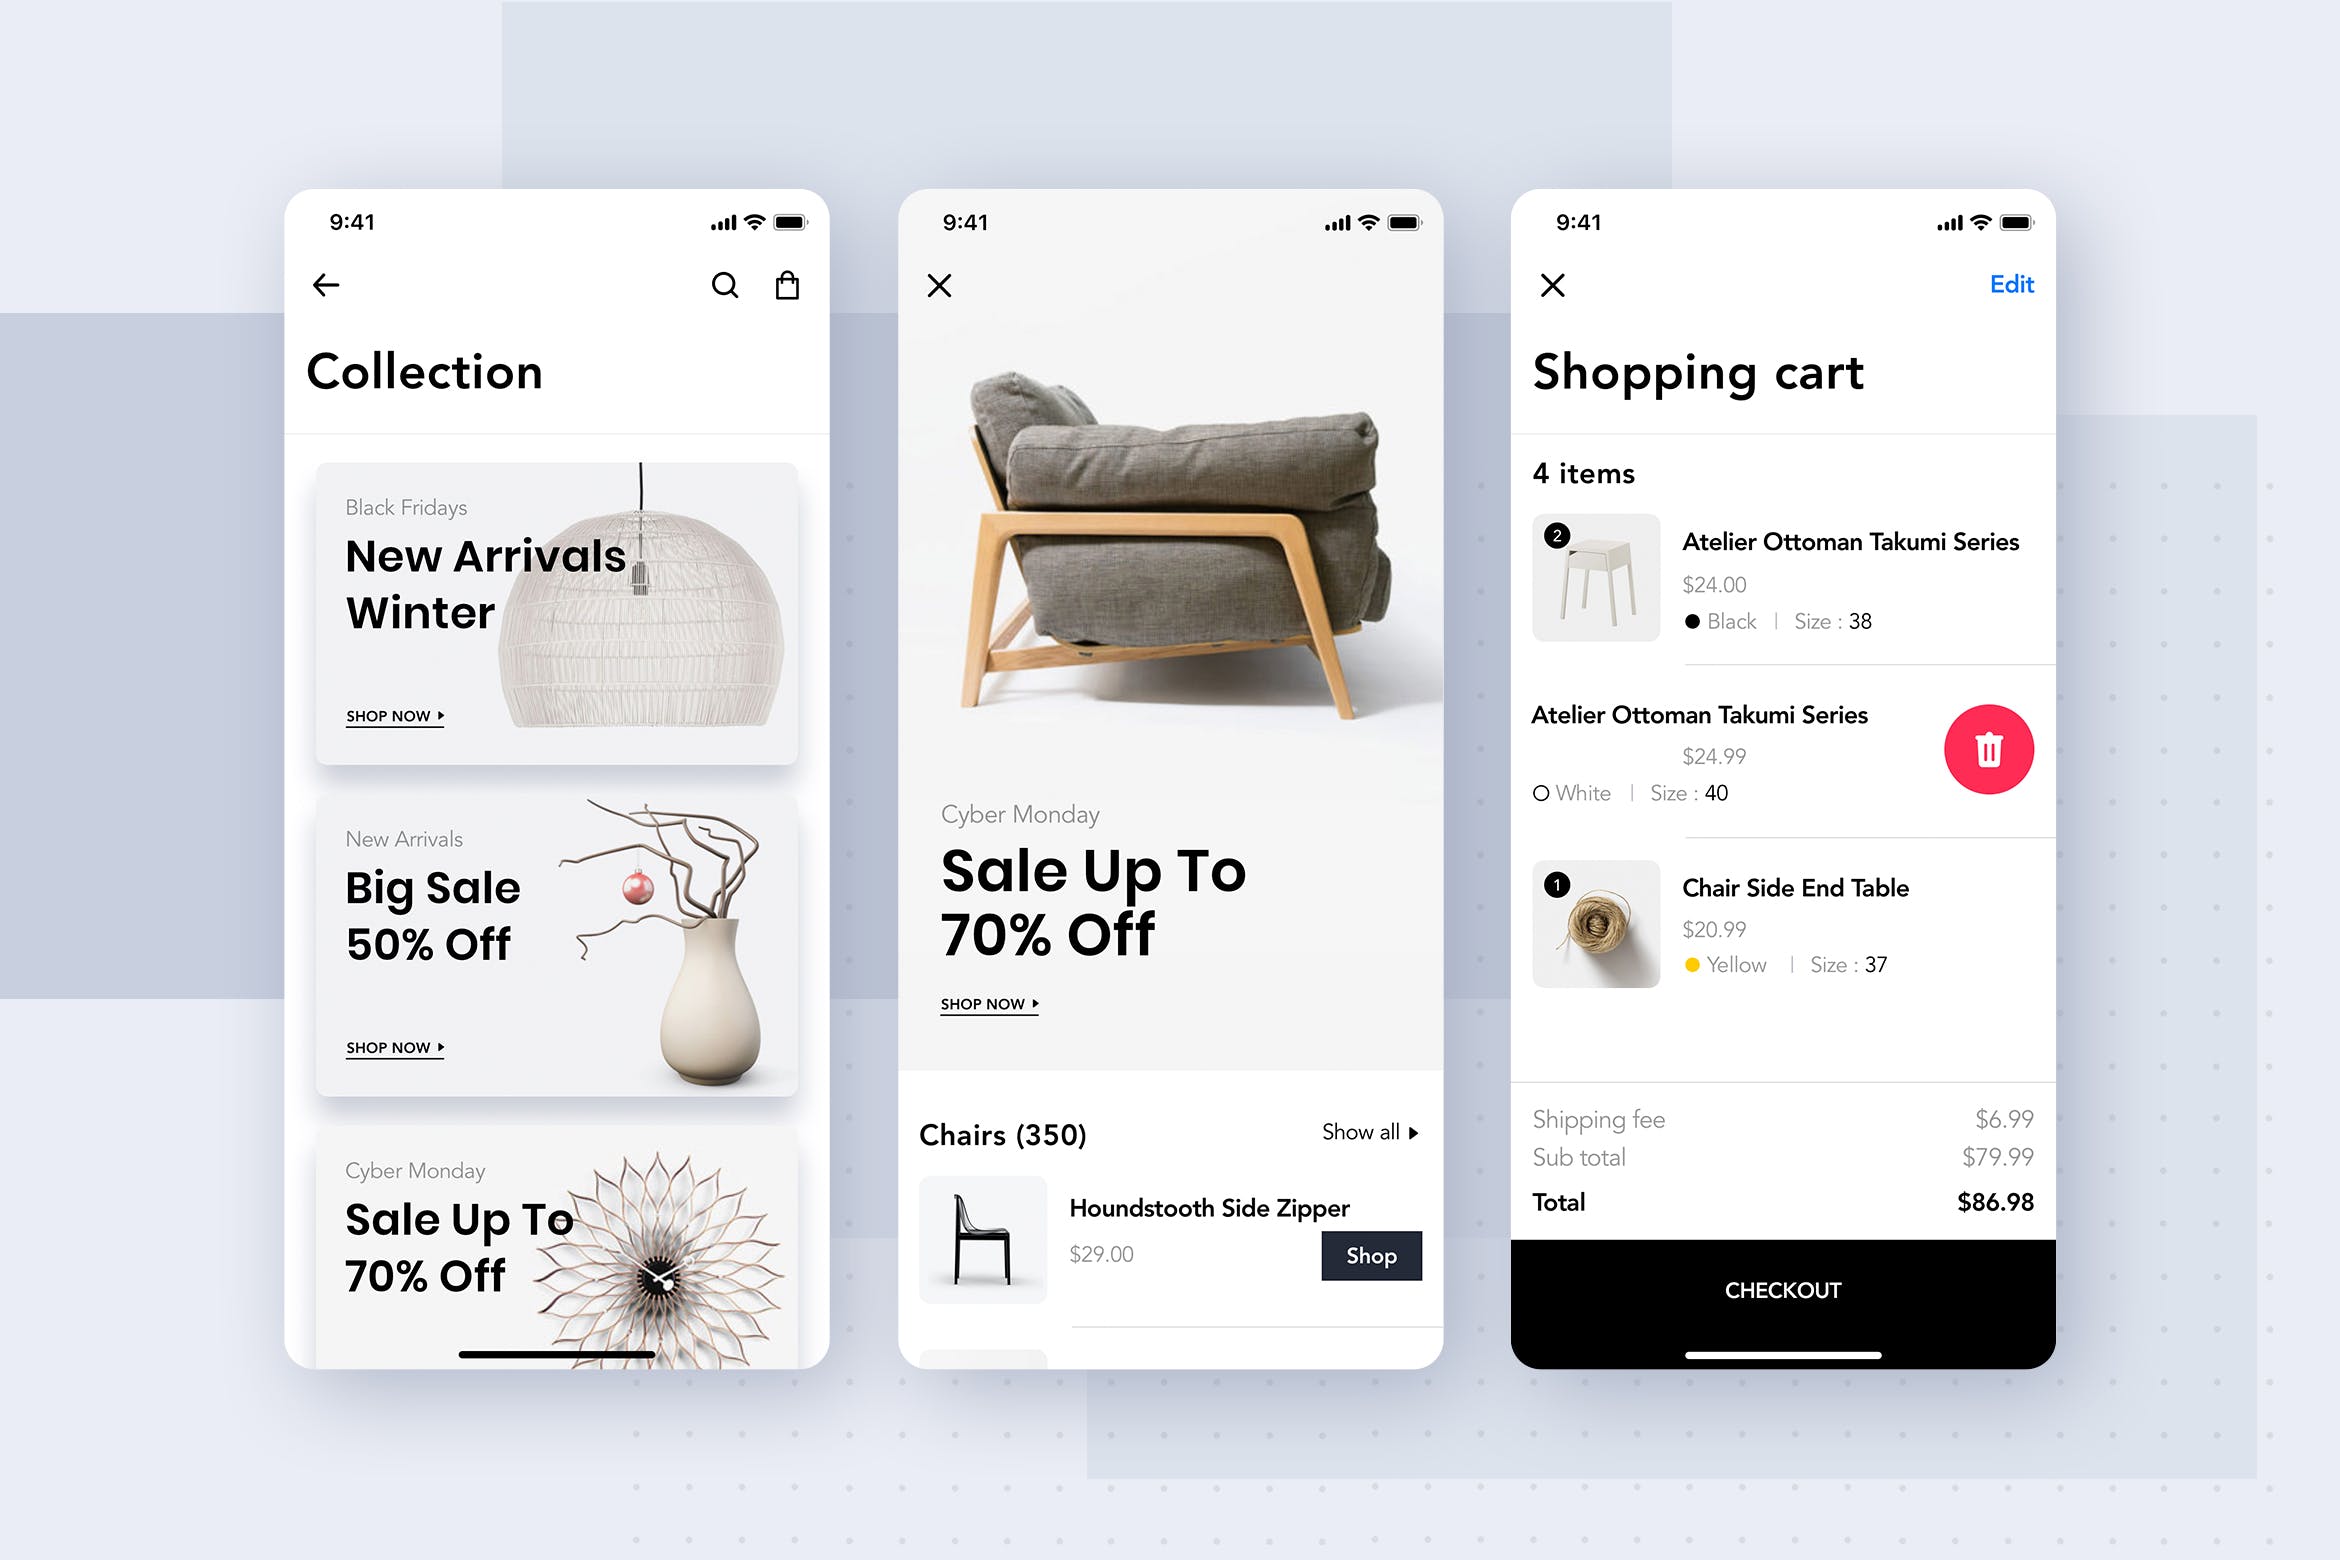 简约风格家具品牌商城促销活动＆购物车界面设计SKETCH素材 Furniture Shop Mobile App UI Concept插图